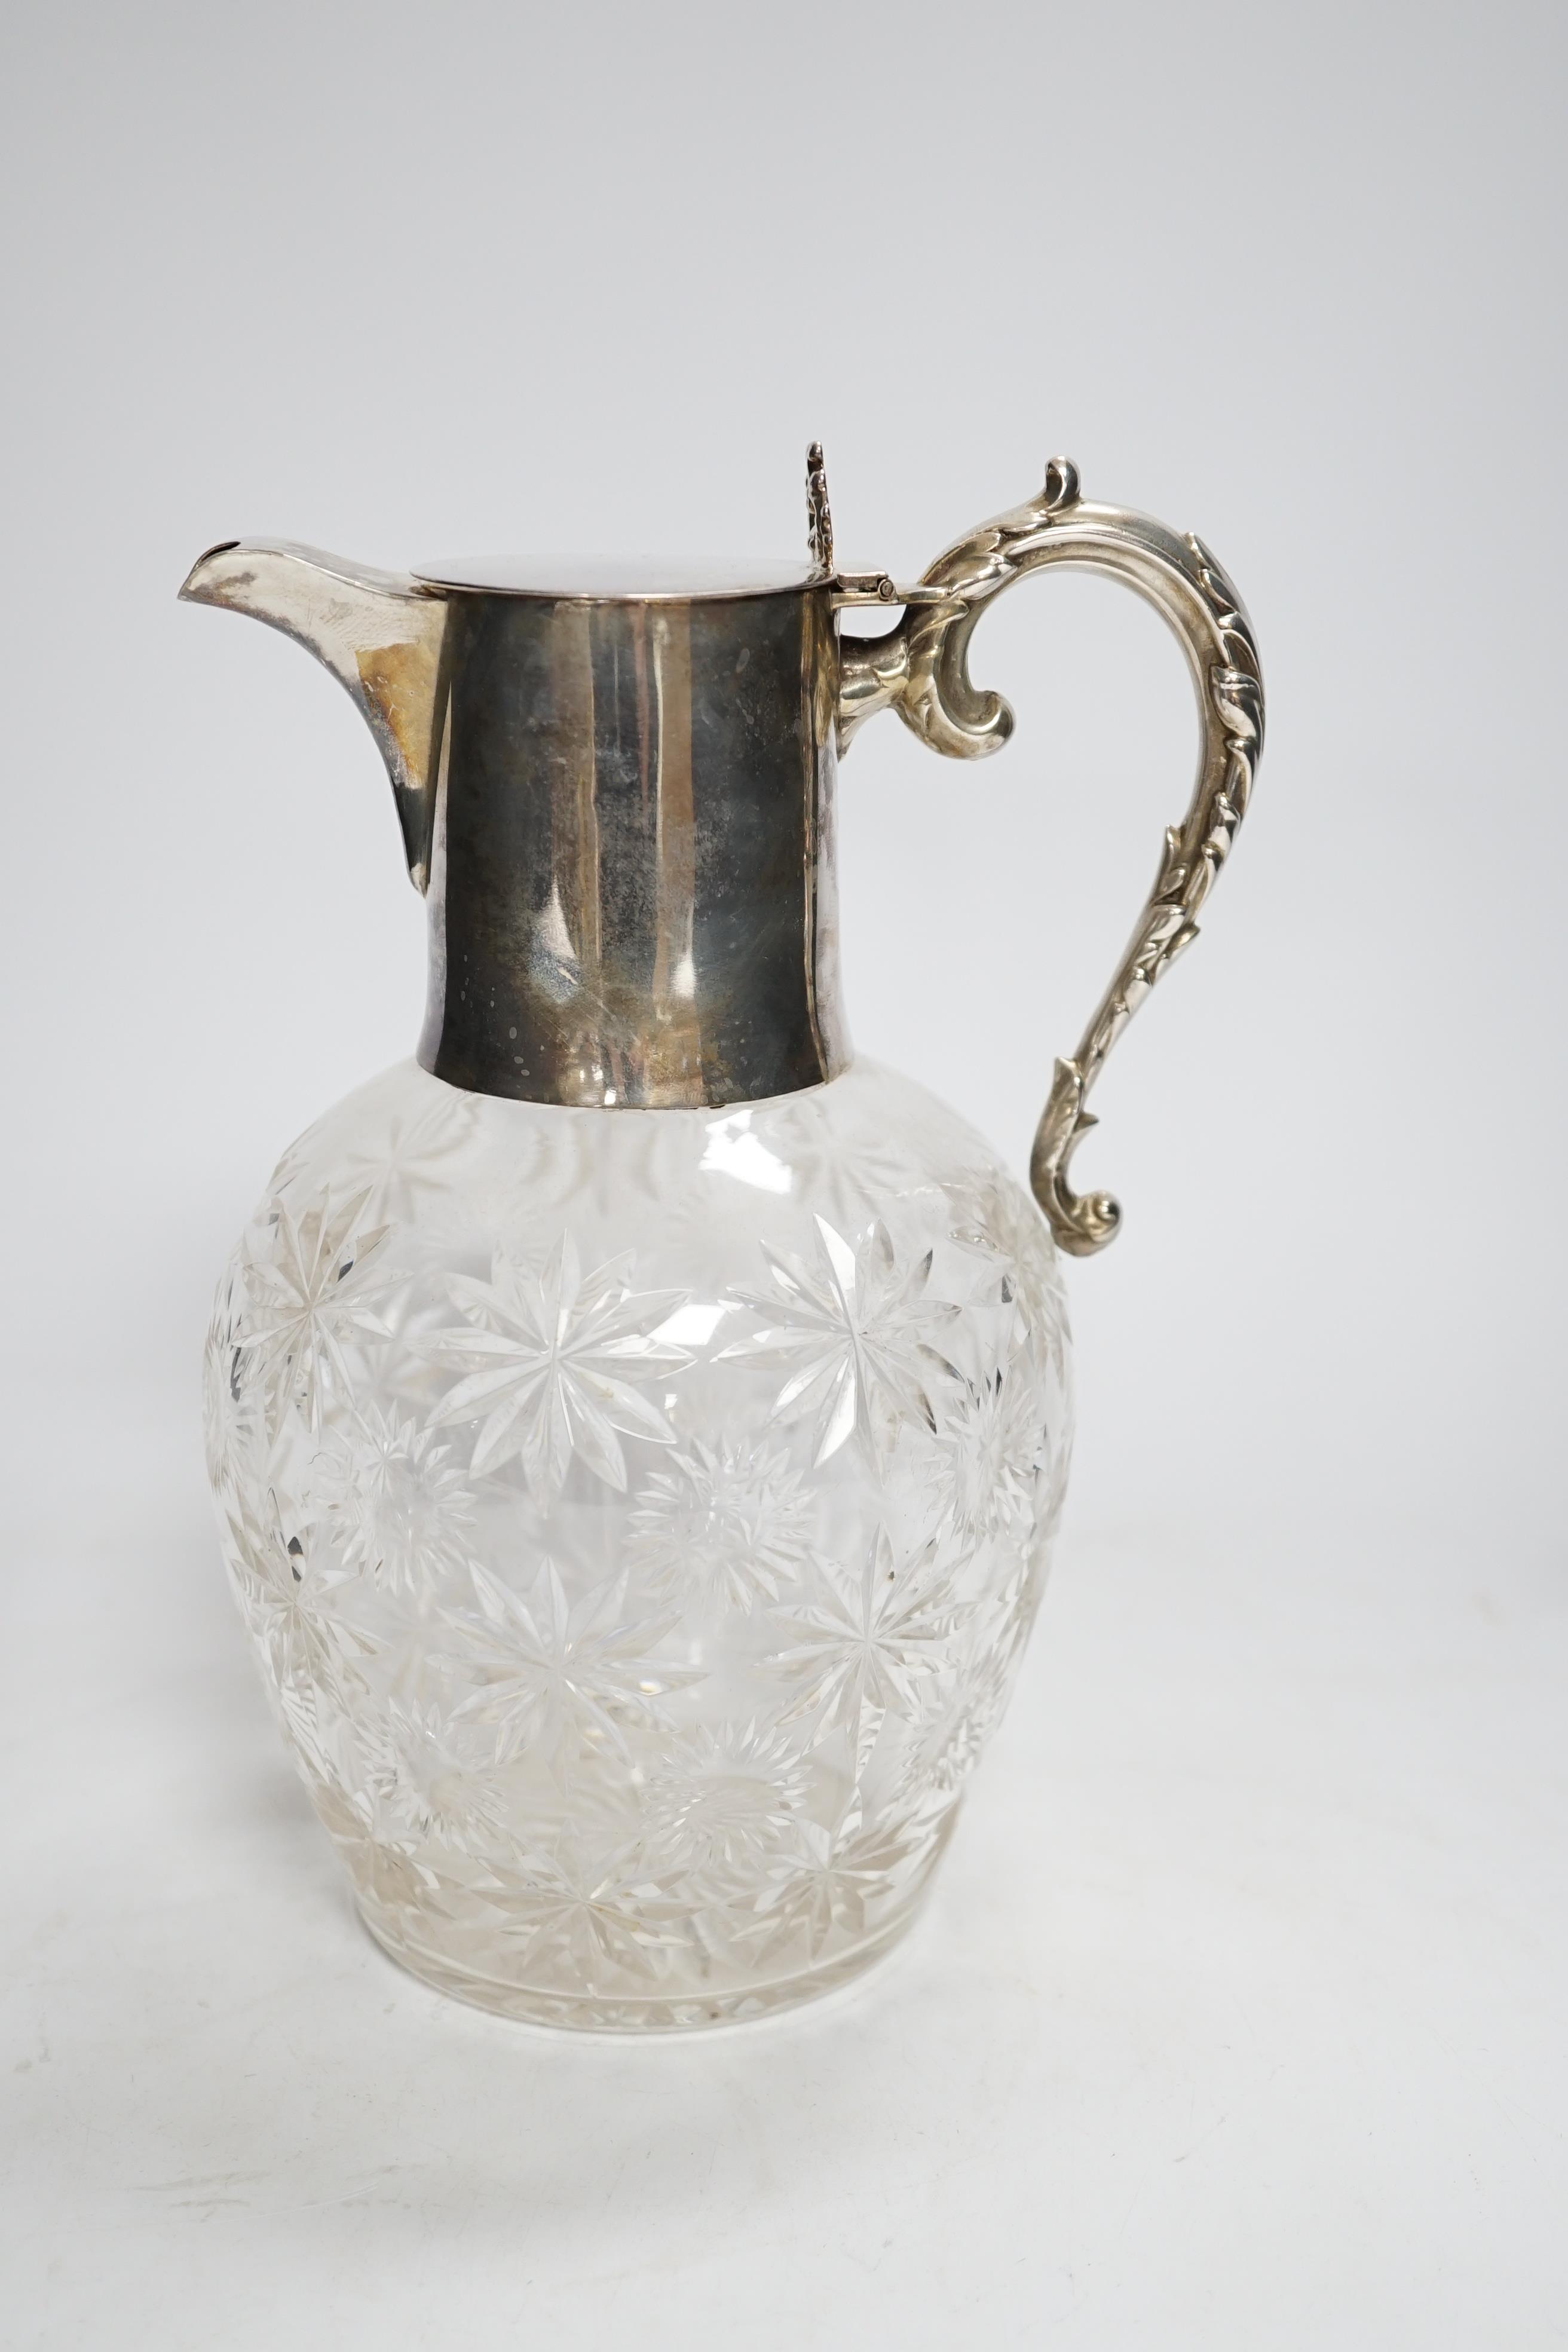 An Edwardian silver mounted cut glass claret jug, William Hutton & Sons, London, 1903, 21.8cm.